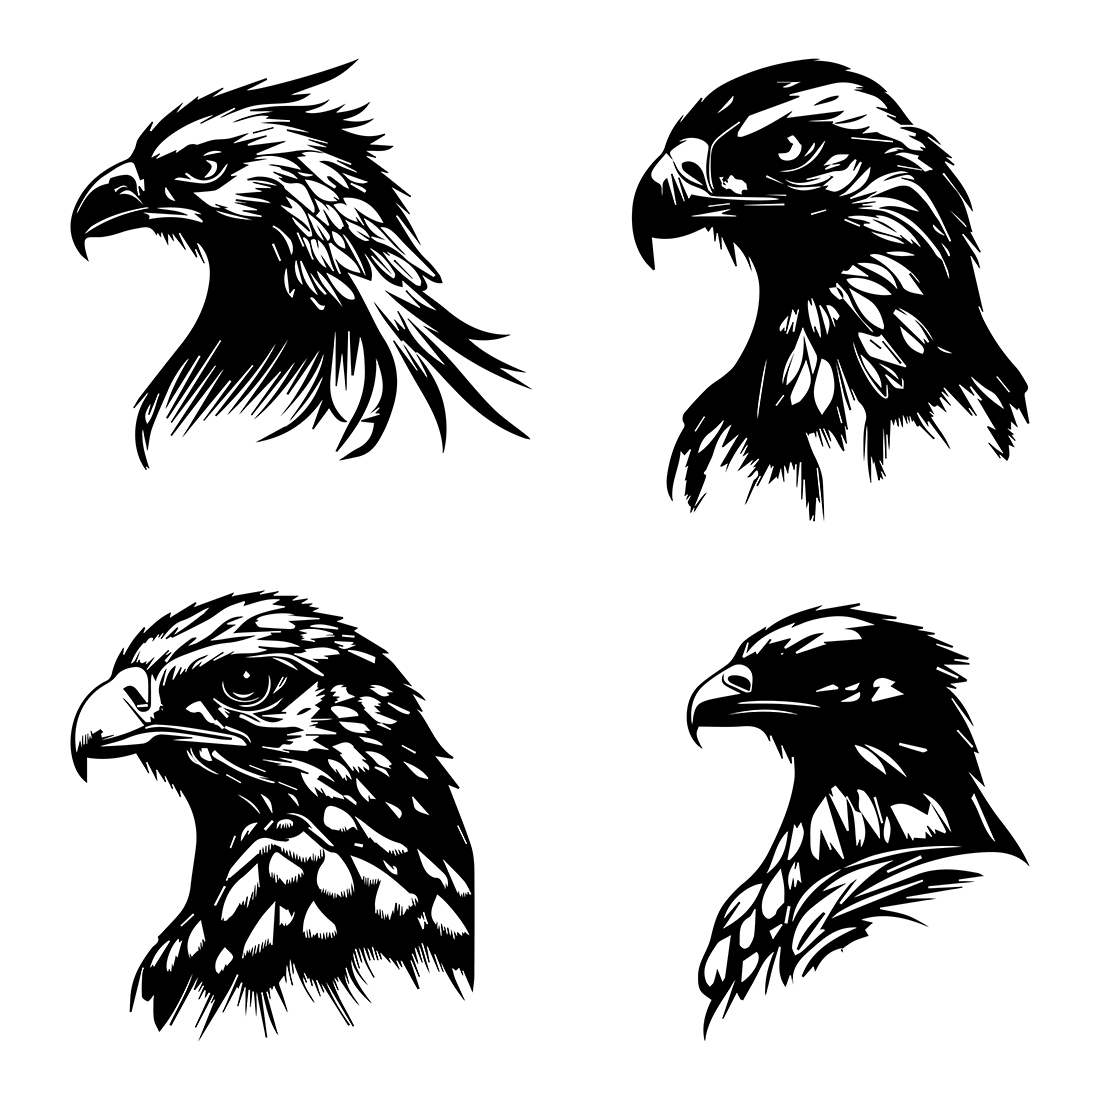 eagle head logo black and white